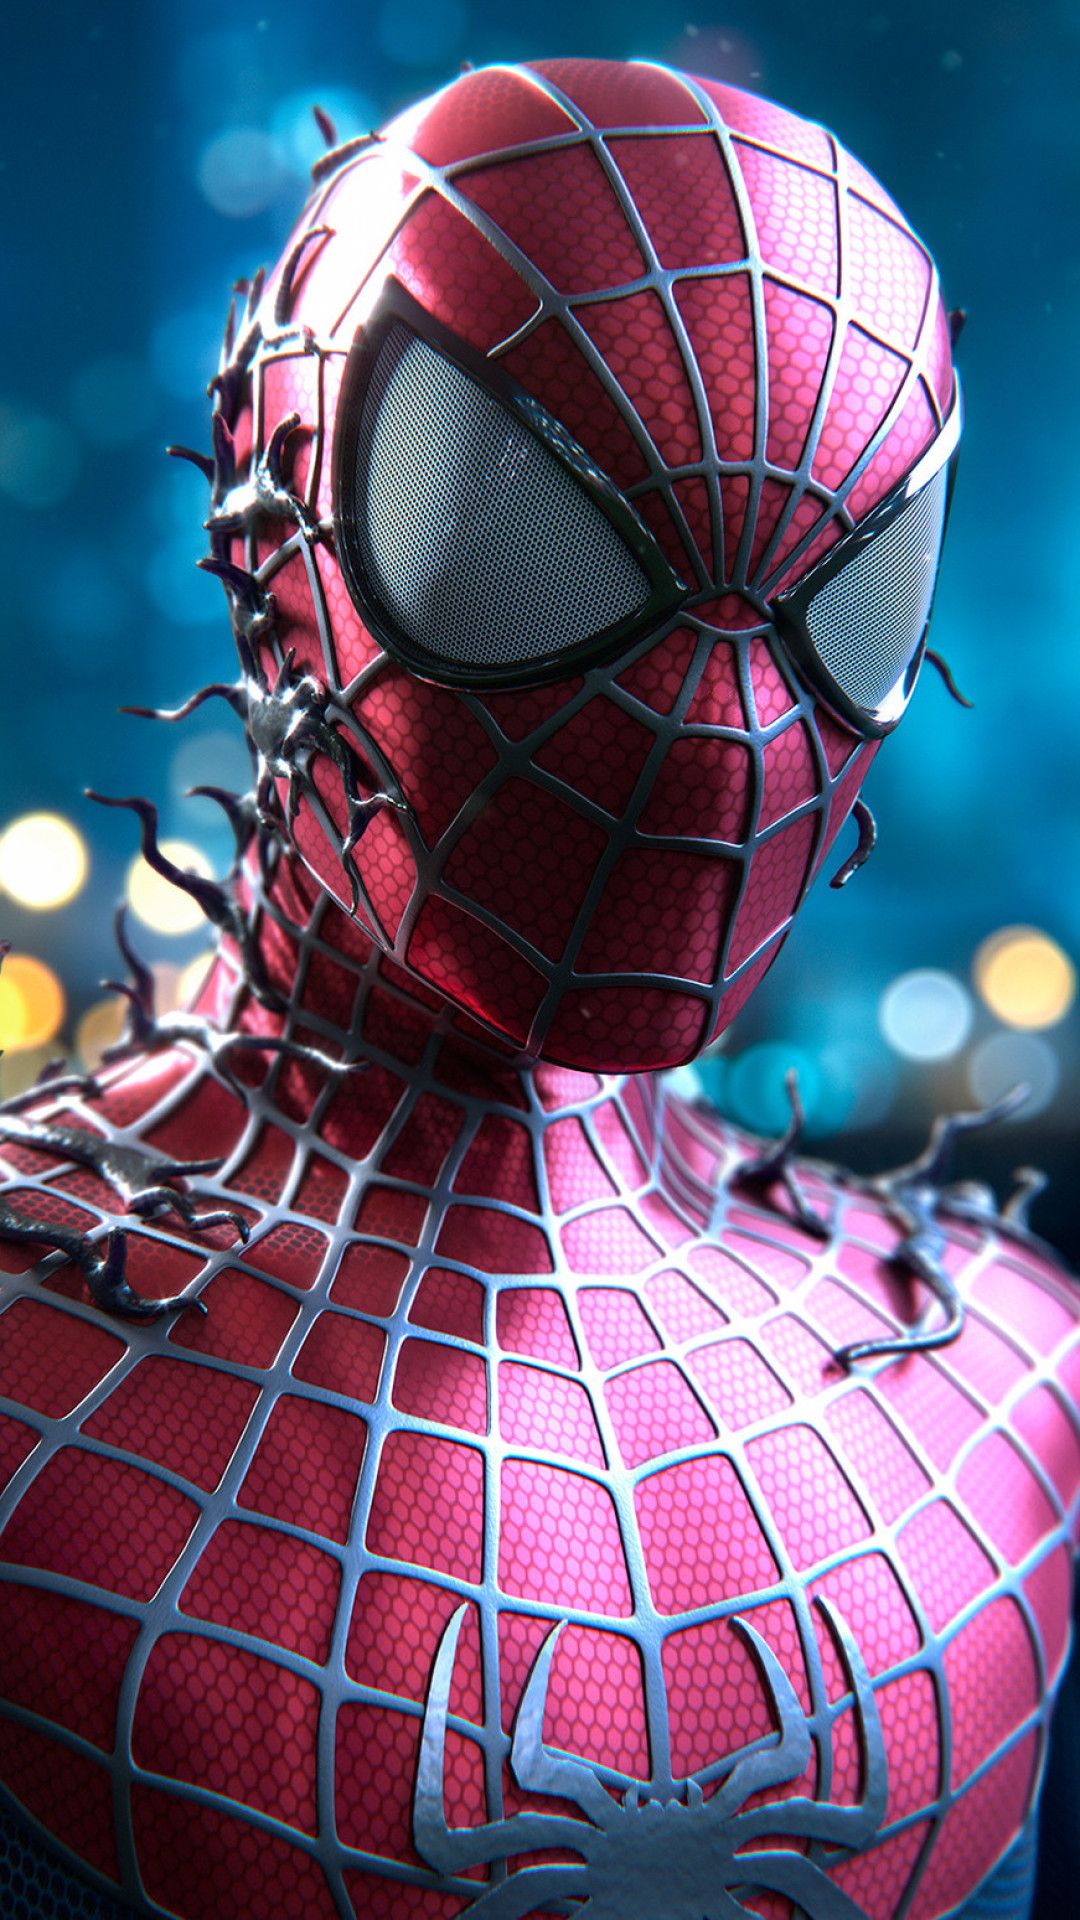 Spiderman Digital Artwork In 1080x1920 Resolution. Spiderman cosplay, Spiderman, Marvel wallpaper hd